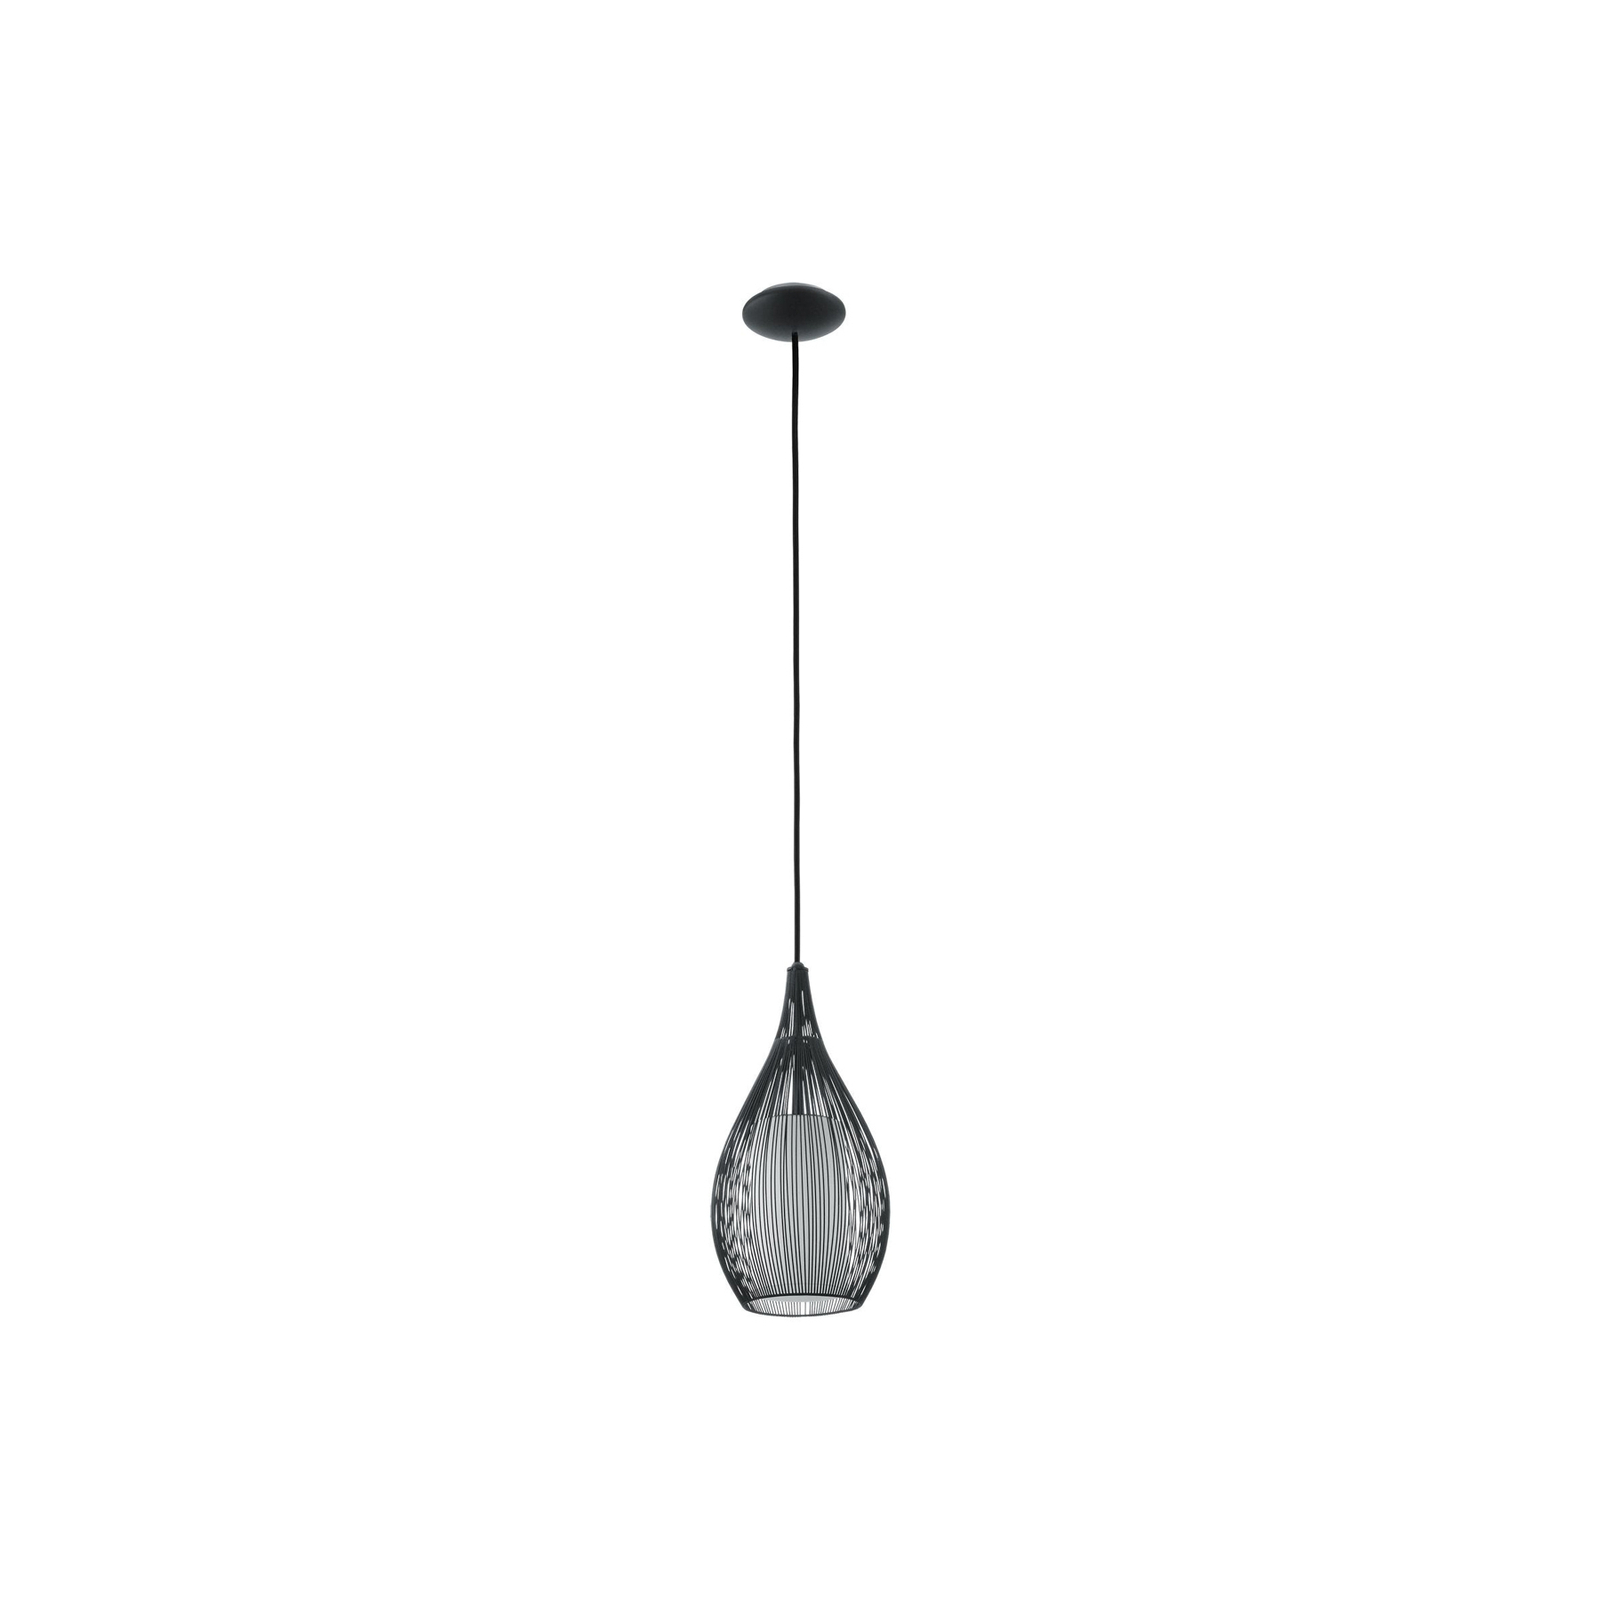 Beacon pendellampa Solis, svart, metall, glas, Ø 19 cm